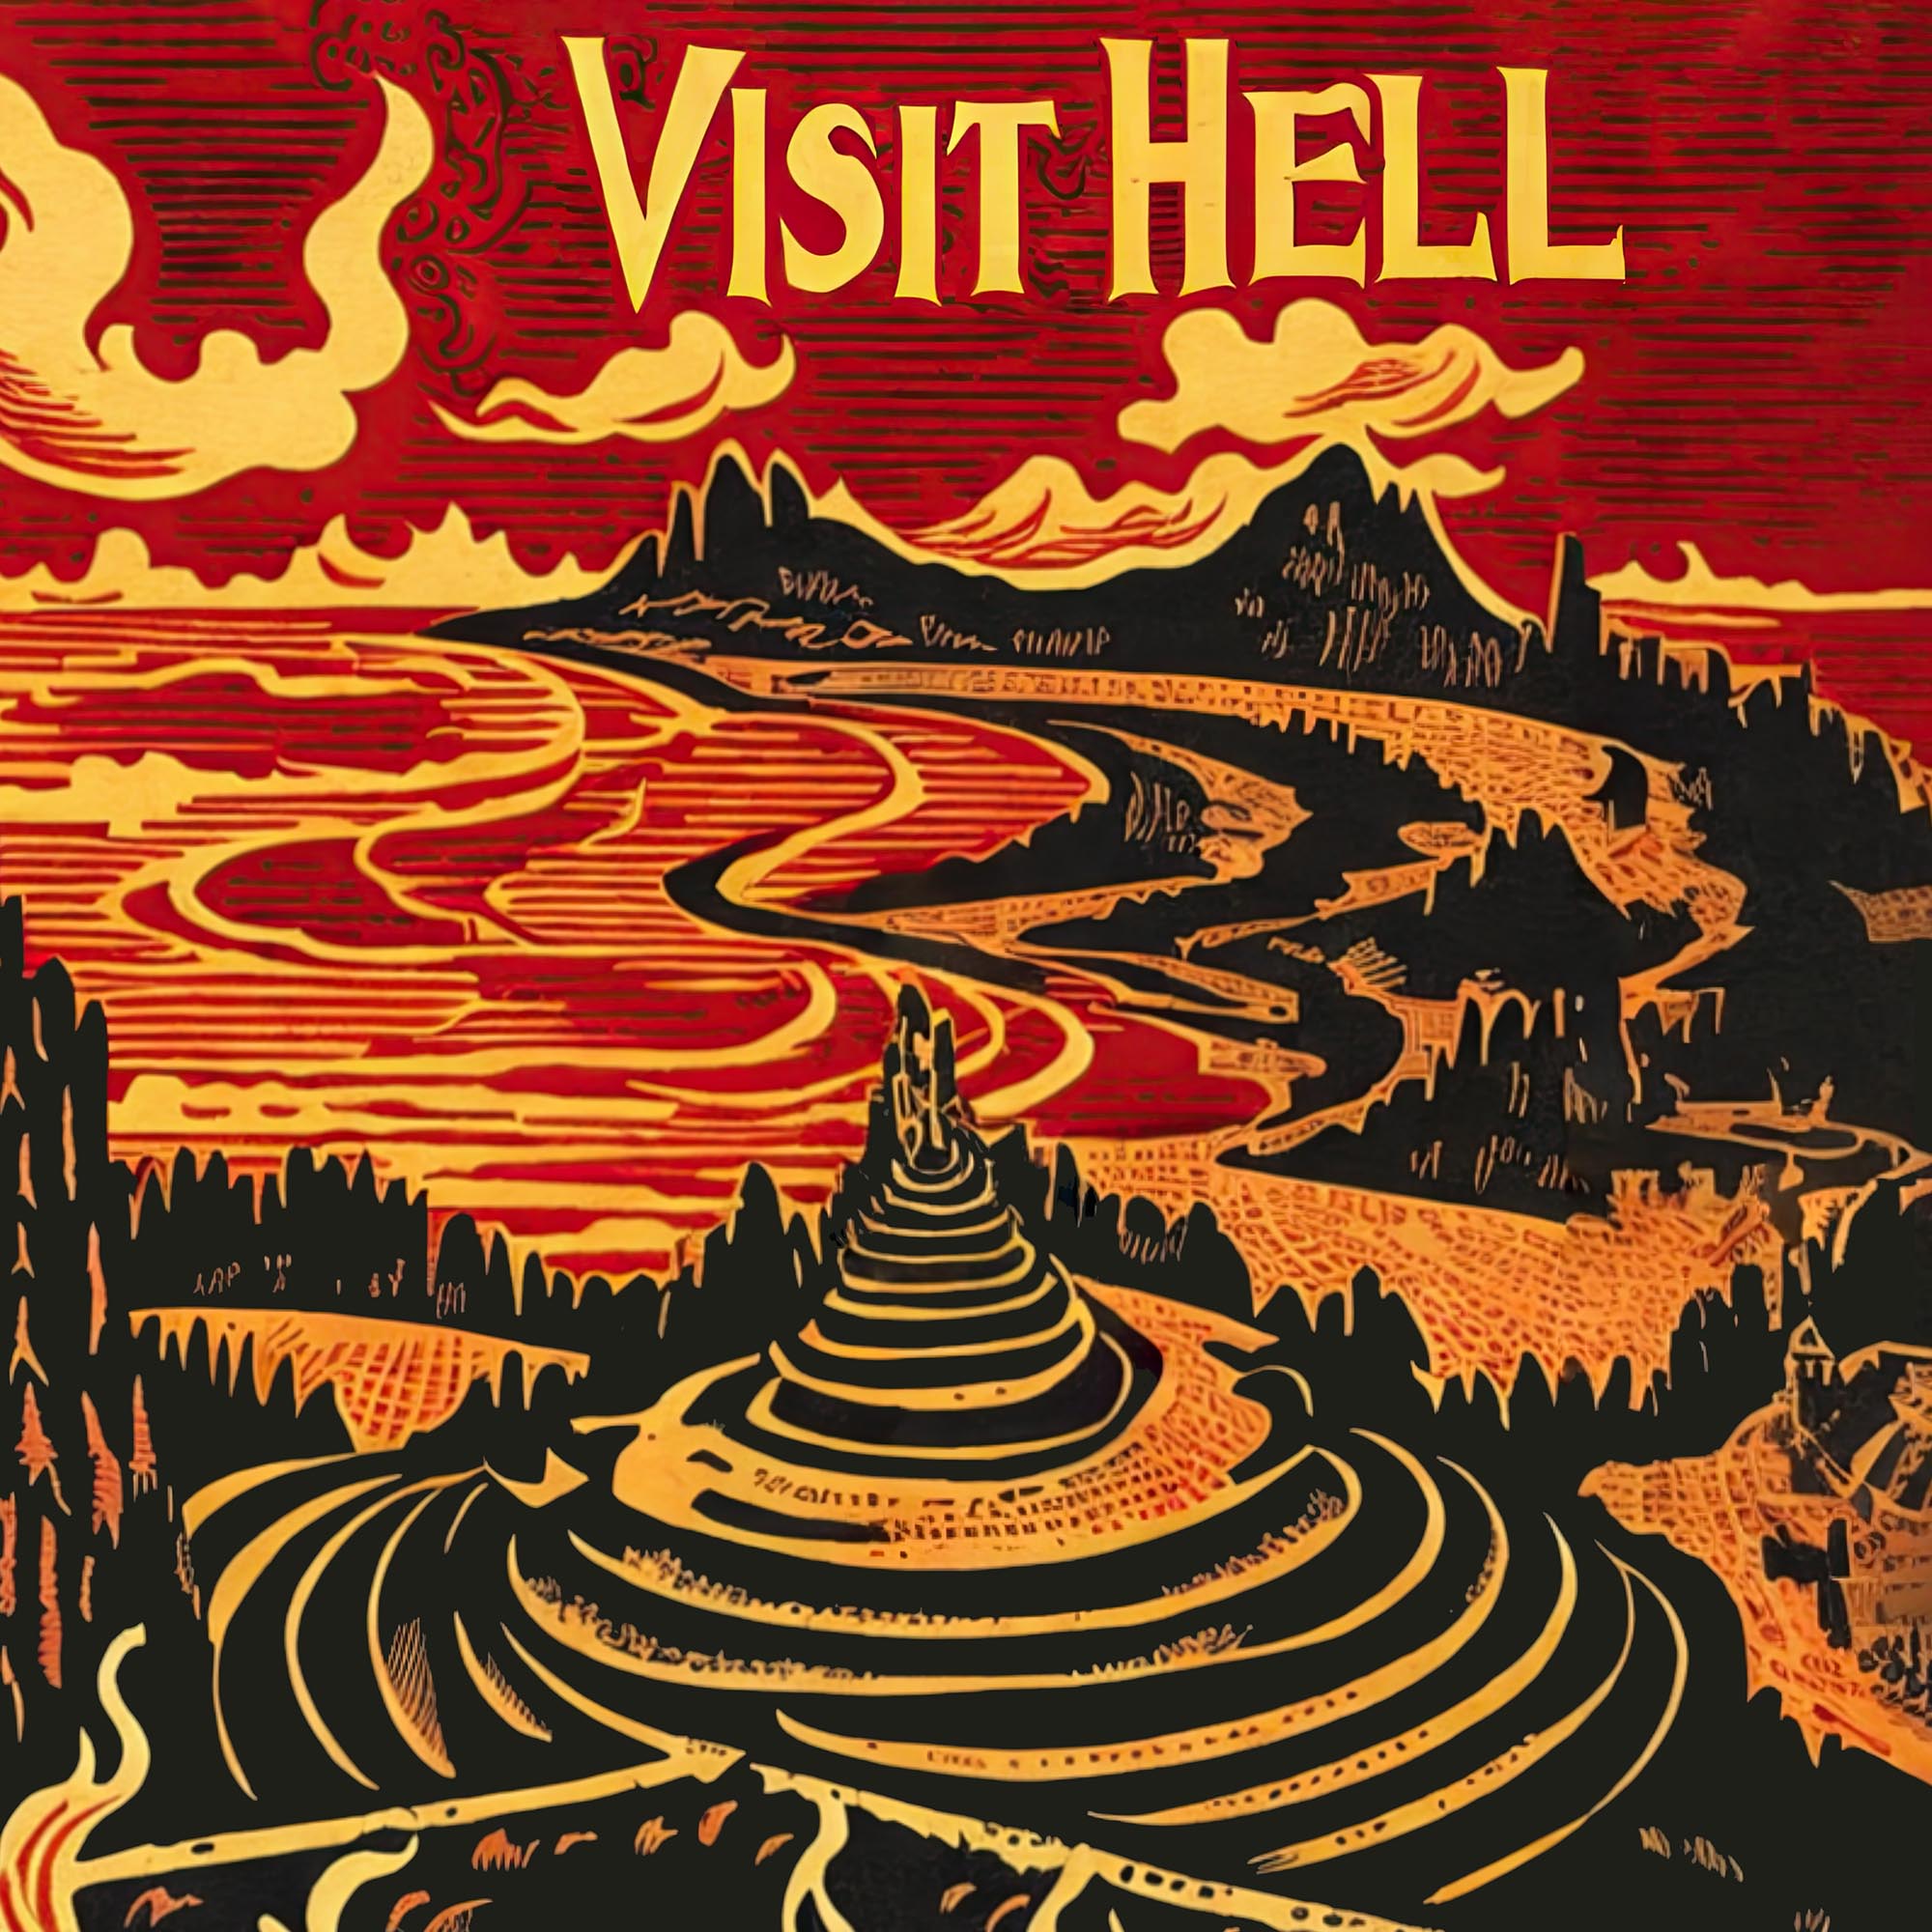 T-Shirts Visit Hell Vintage Travel Poster Shirt | No Self, Impermanence, Suffering | Buddhist Cosmology | Samsara Graphic Art T-Shirt